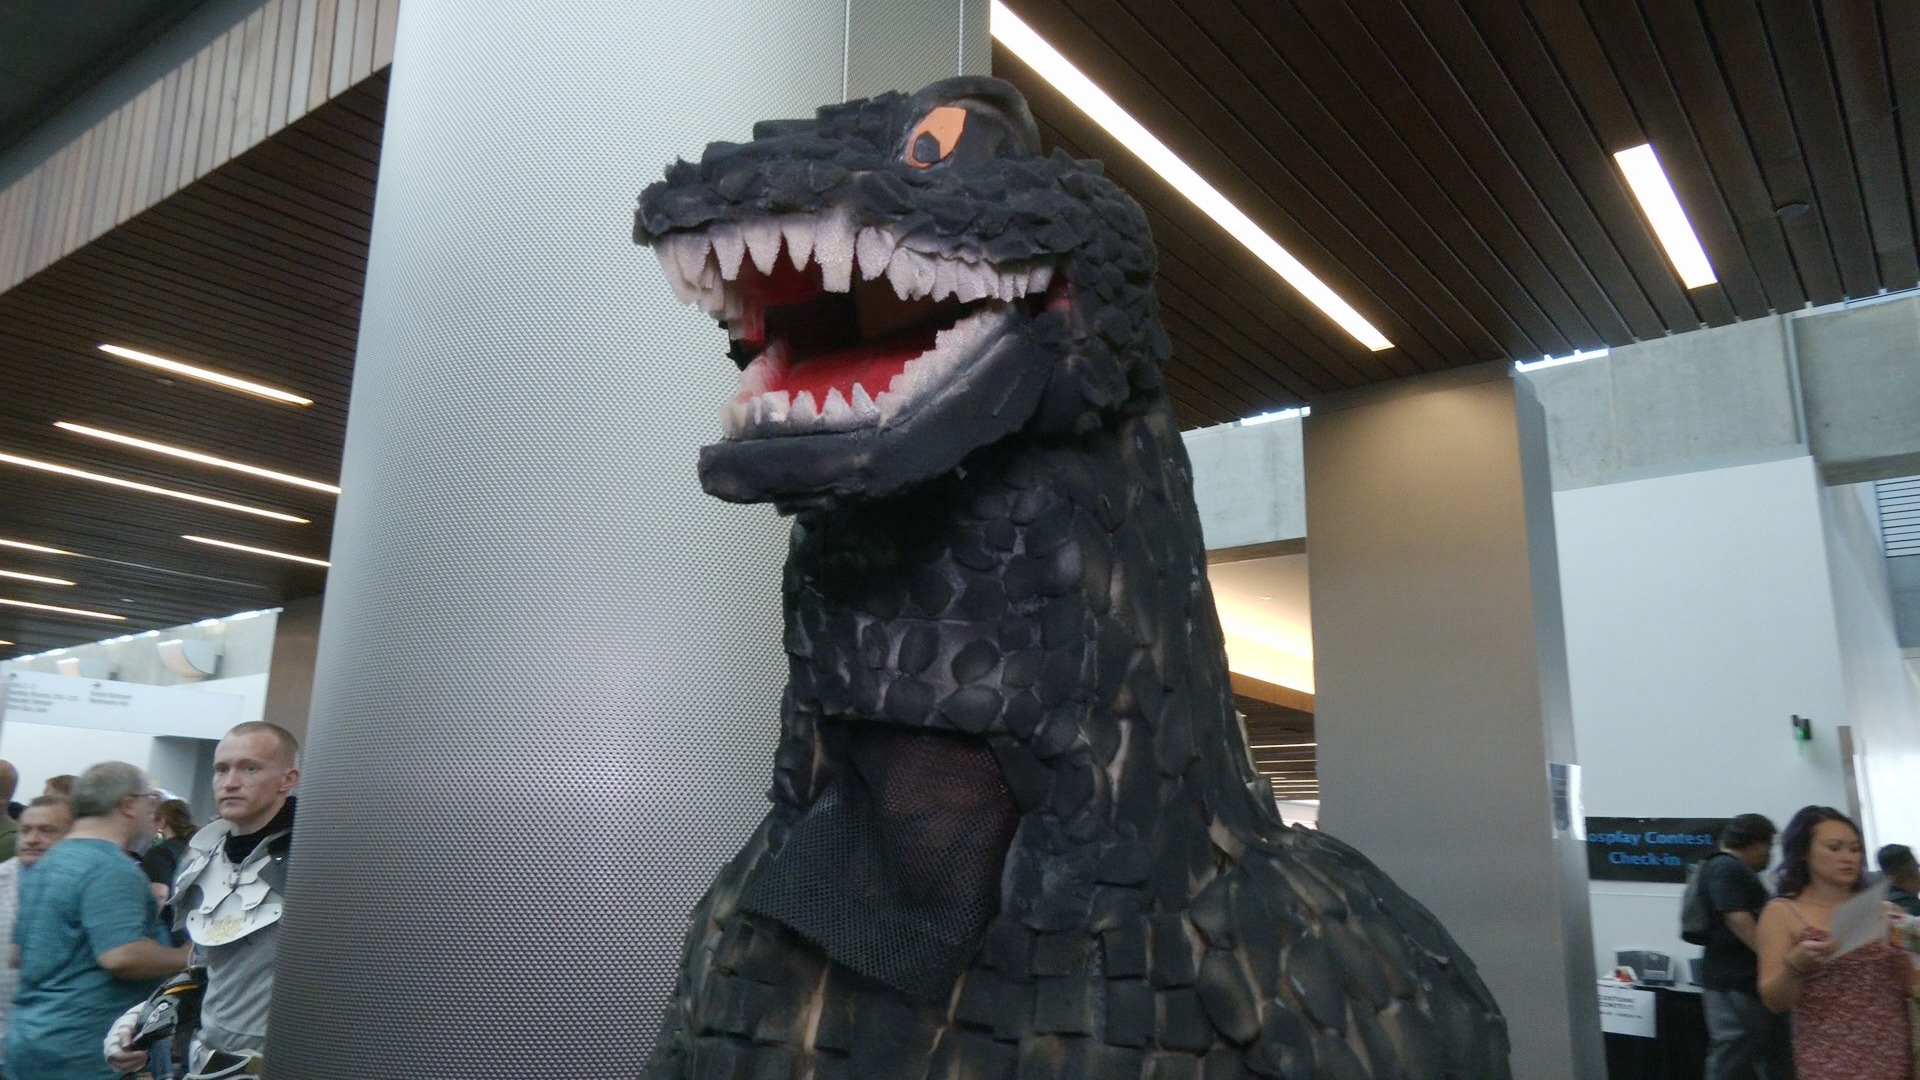 The head of Jose's Godzilla costume